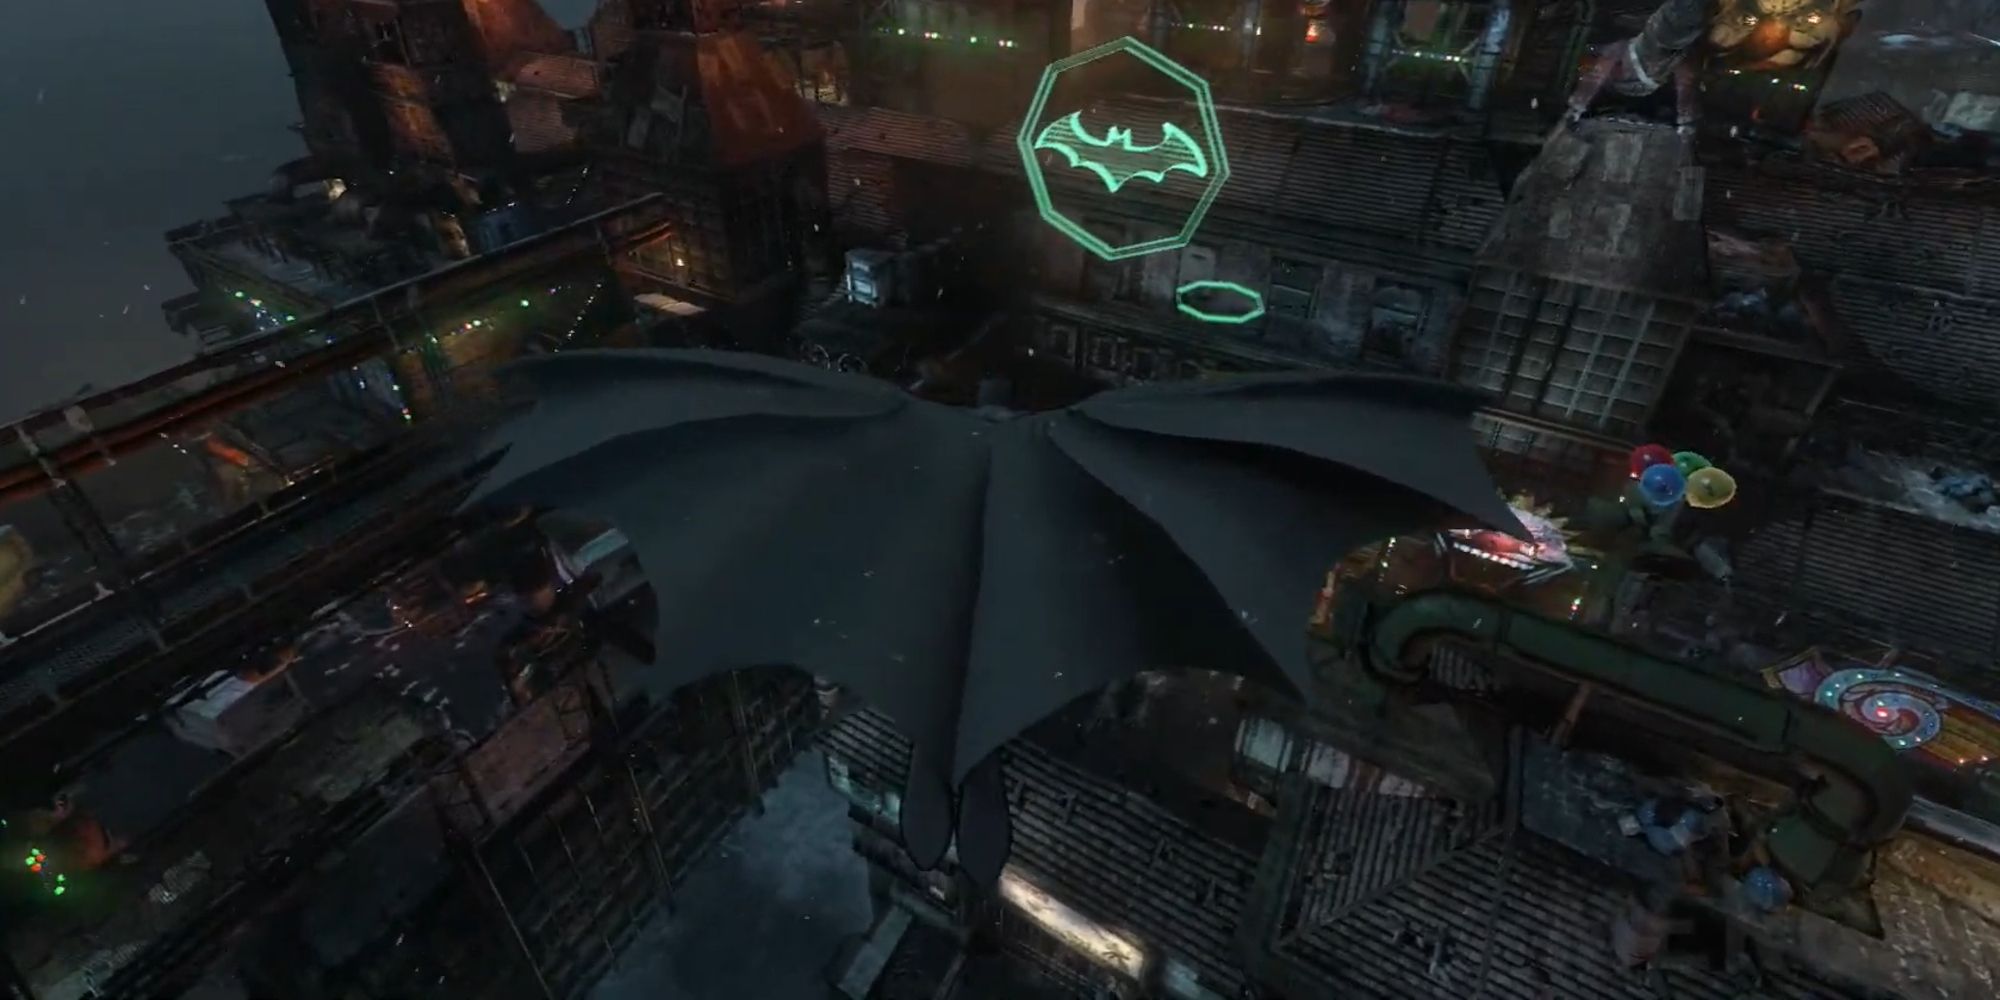 Batman gliding towards the AR Training rings in Batman Arkham City